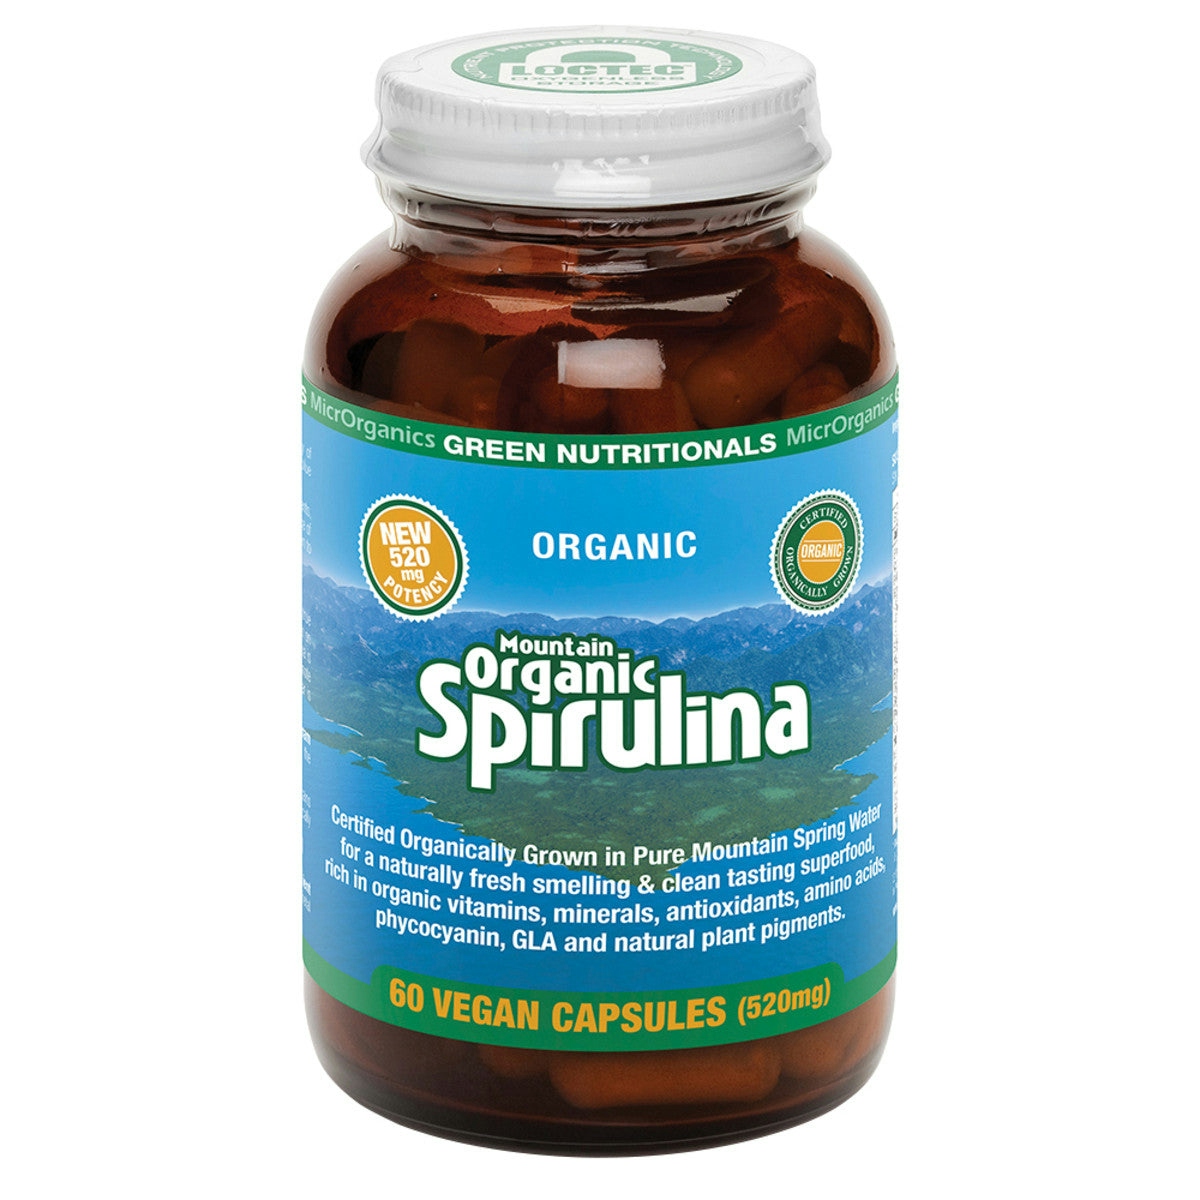 image of MicrOrganics Green Nutritionals Mountain Organic Spirulina 520mg 60vc on white background